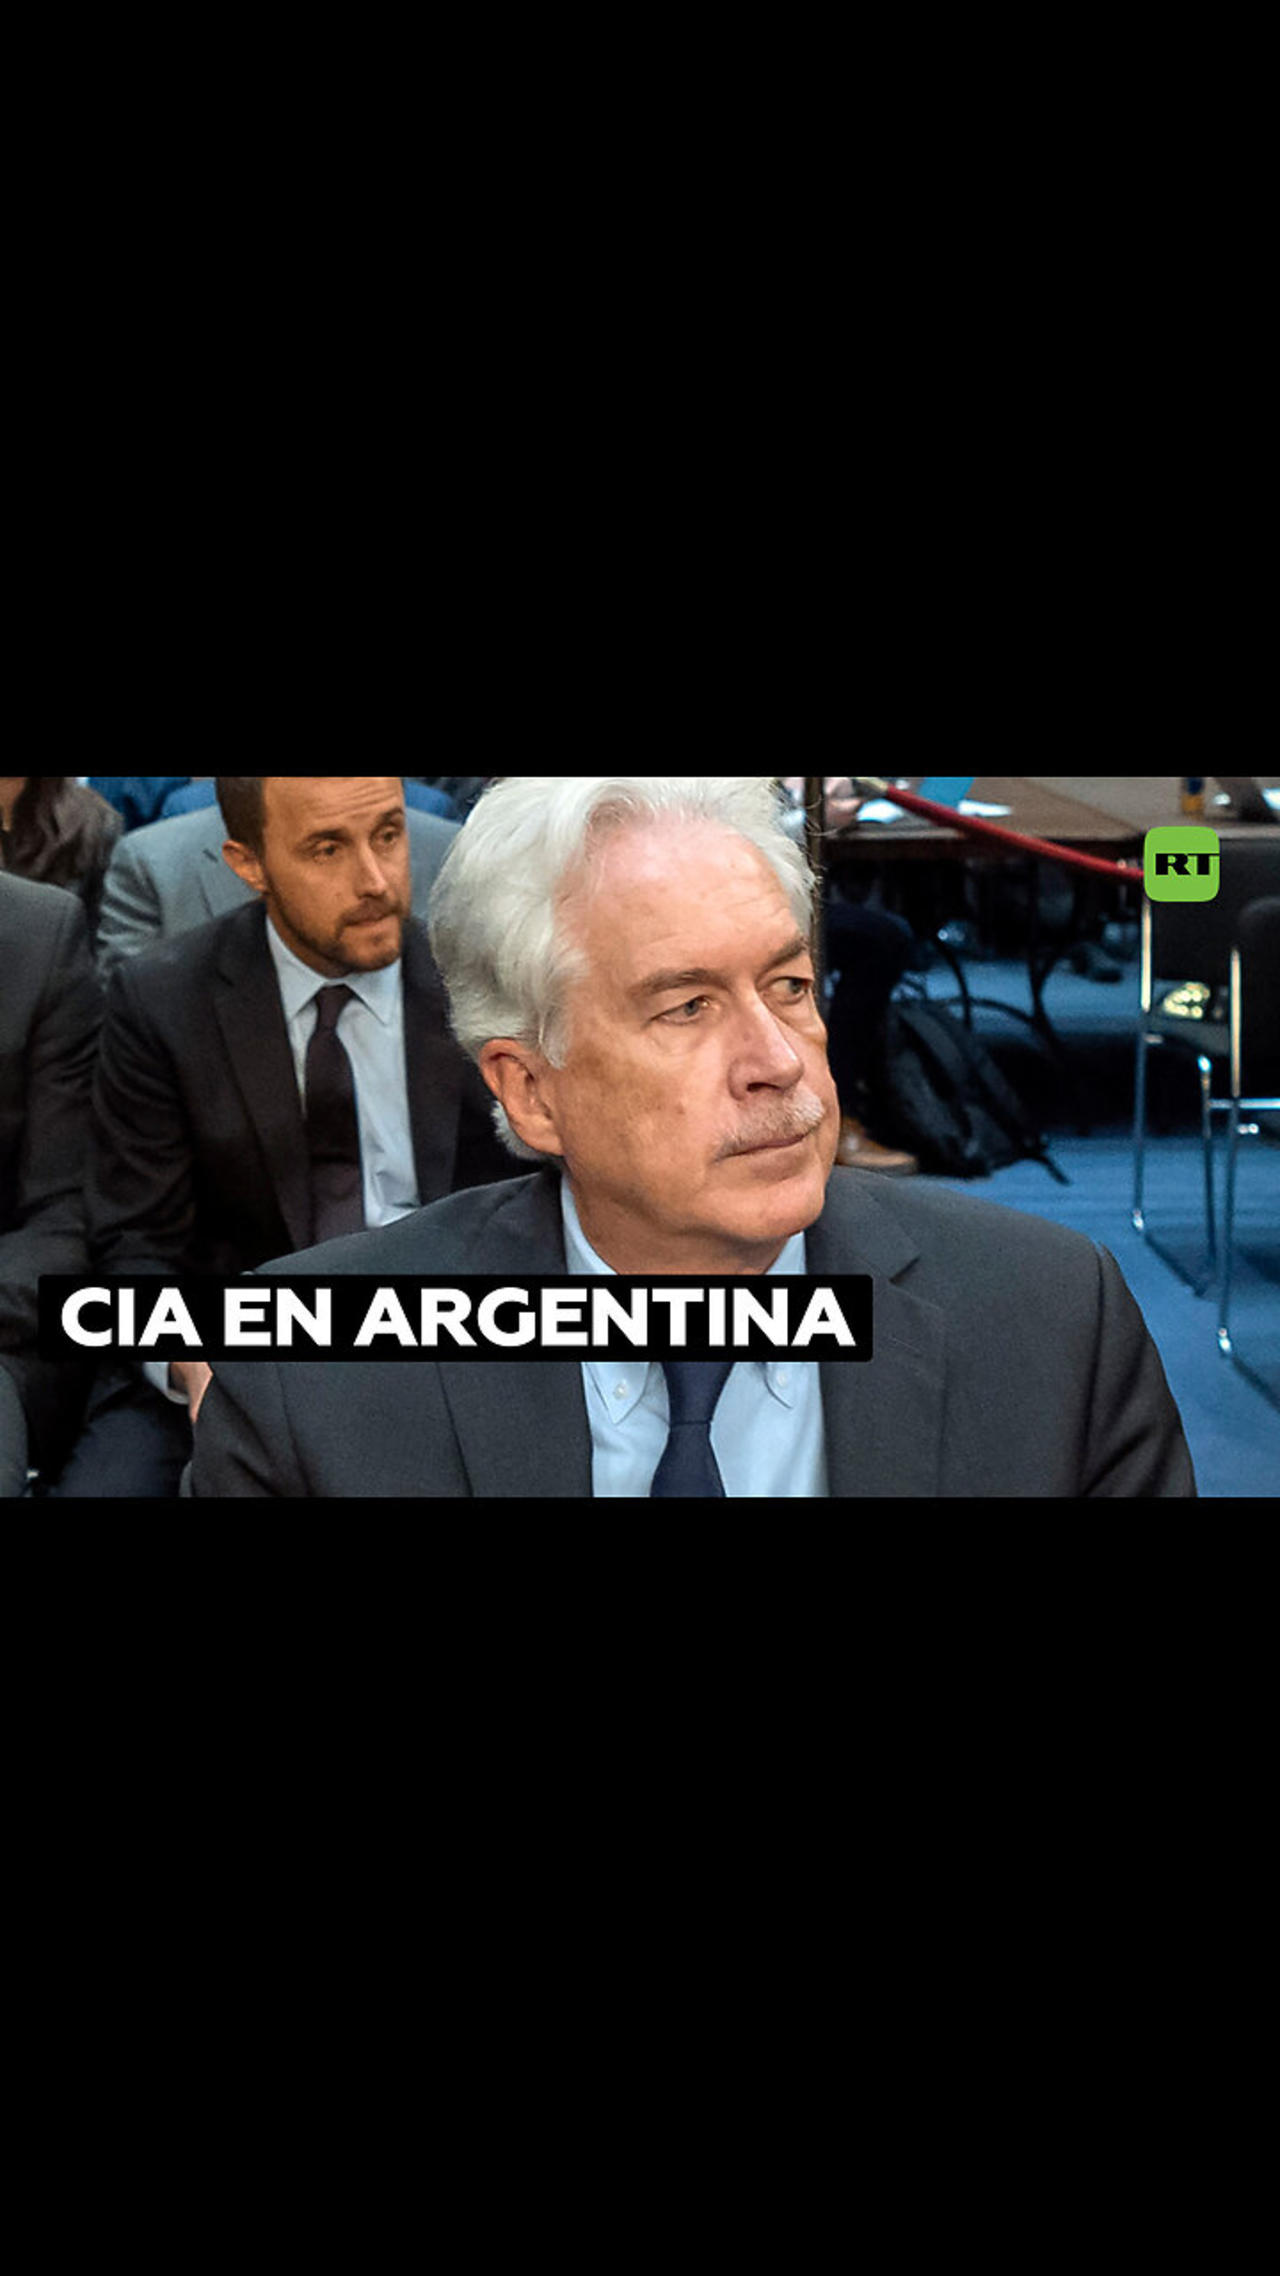 Director de la CIA visita Argentina